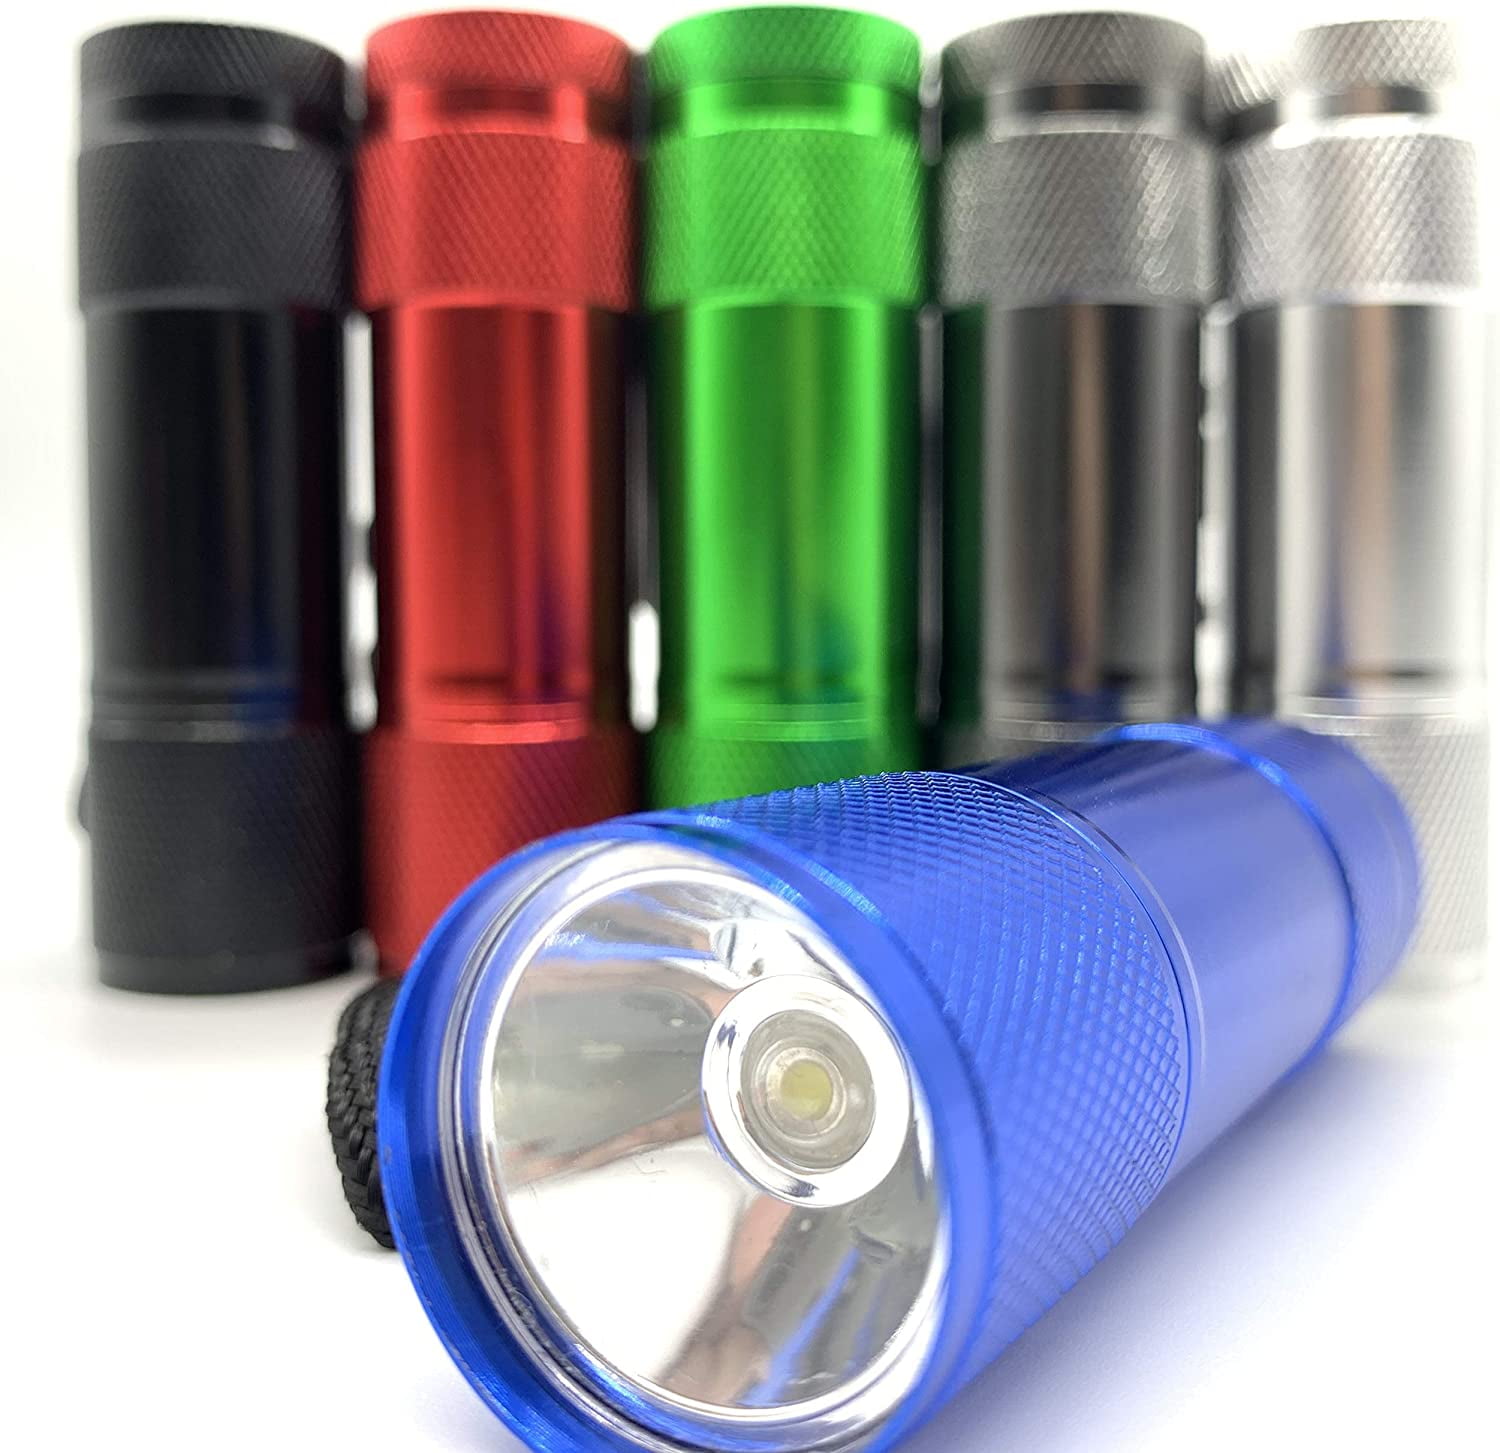 Mini Flashlight 6-Pack with 18 AAA Batteries, Super Bright 100 LM Mini Flashlights Colors Assorted - Best Mini Gifts for Kids, Men, Women - Walmart.com